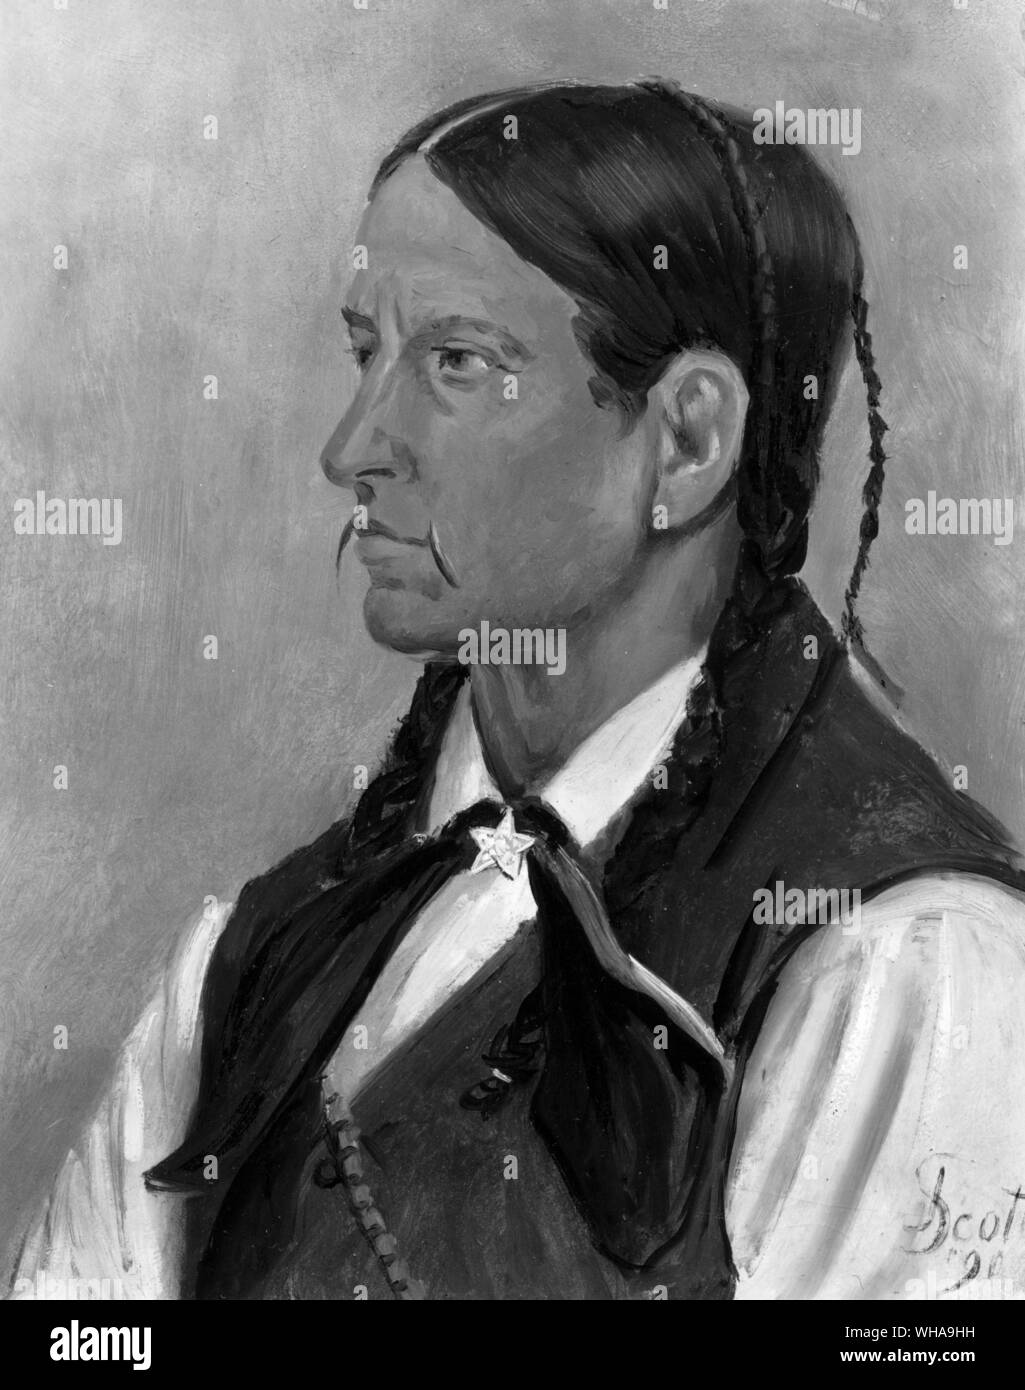 Julian Scott. Quanah Parker Oklahoma. Stock Photo